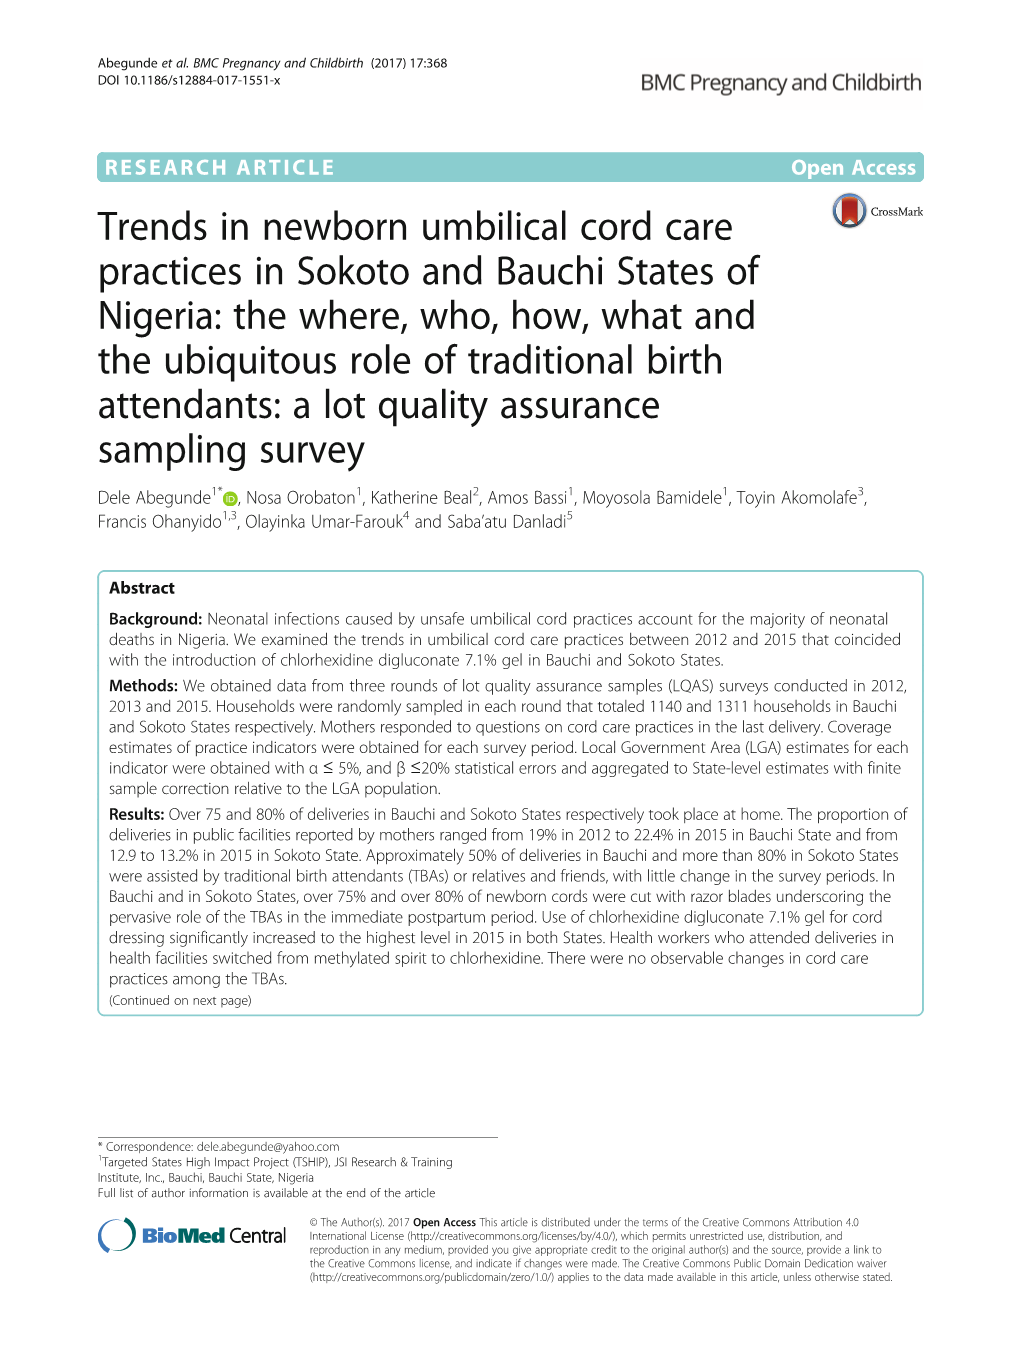 Trends in Newborn Umbilical Cord Care Practices in Sokoto and Bauchi